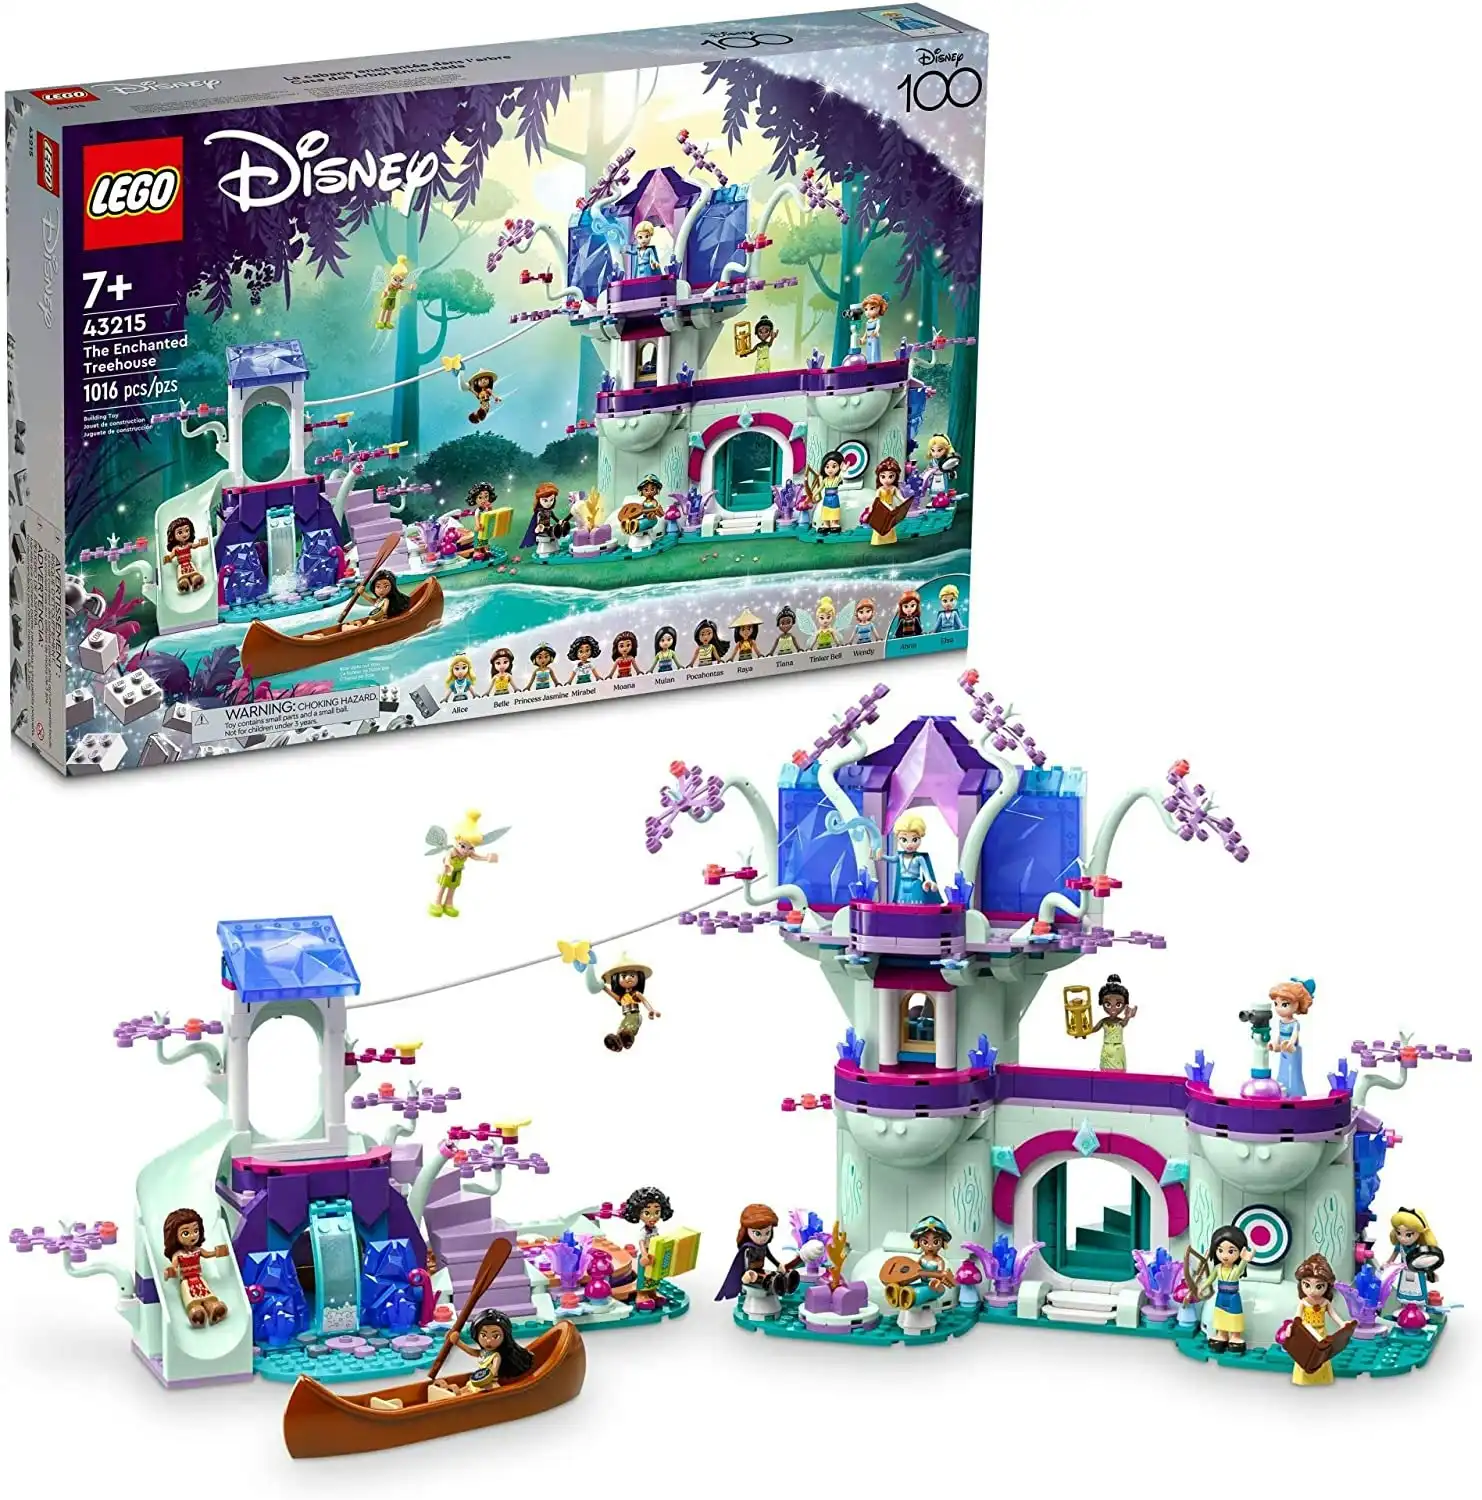 LEGO Disney Magical Treehouse 43215